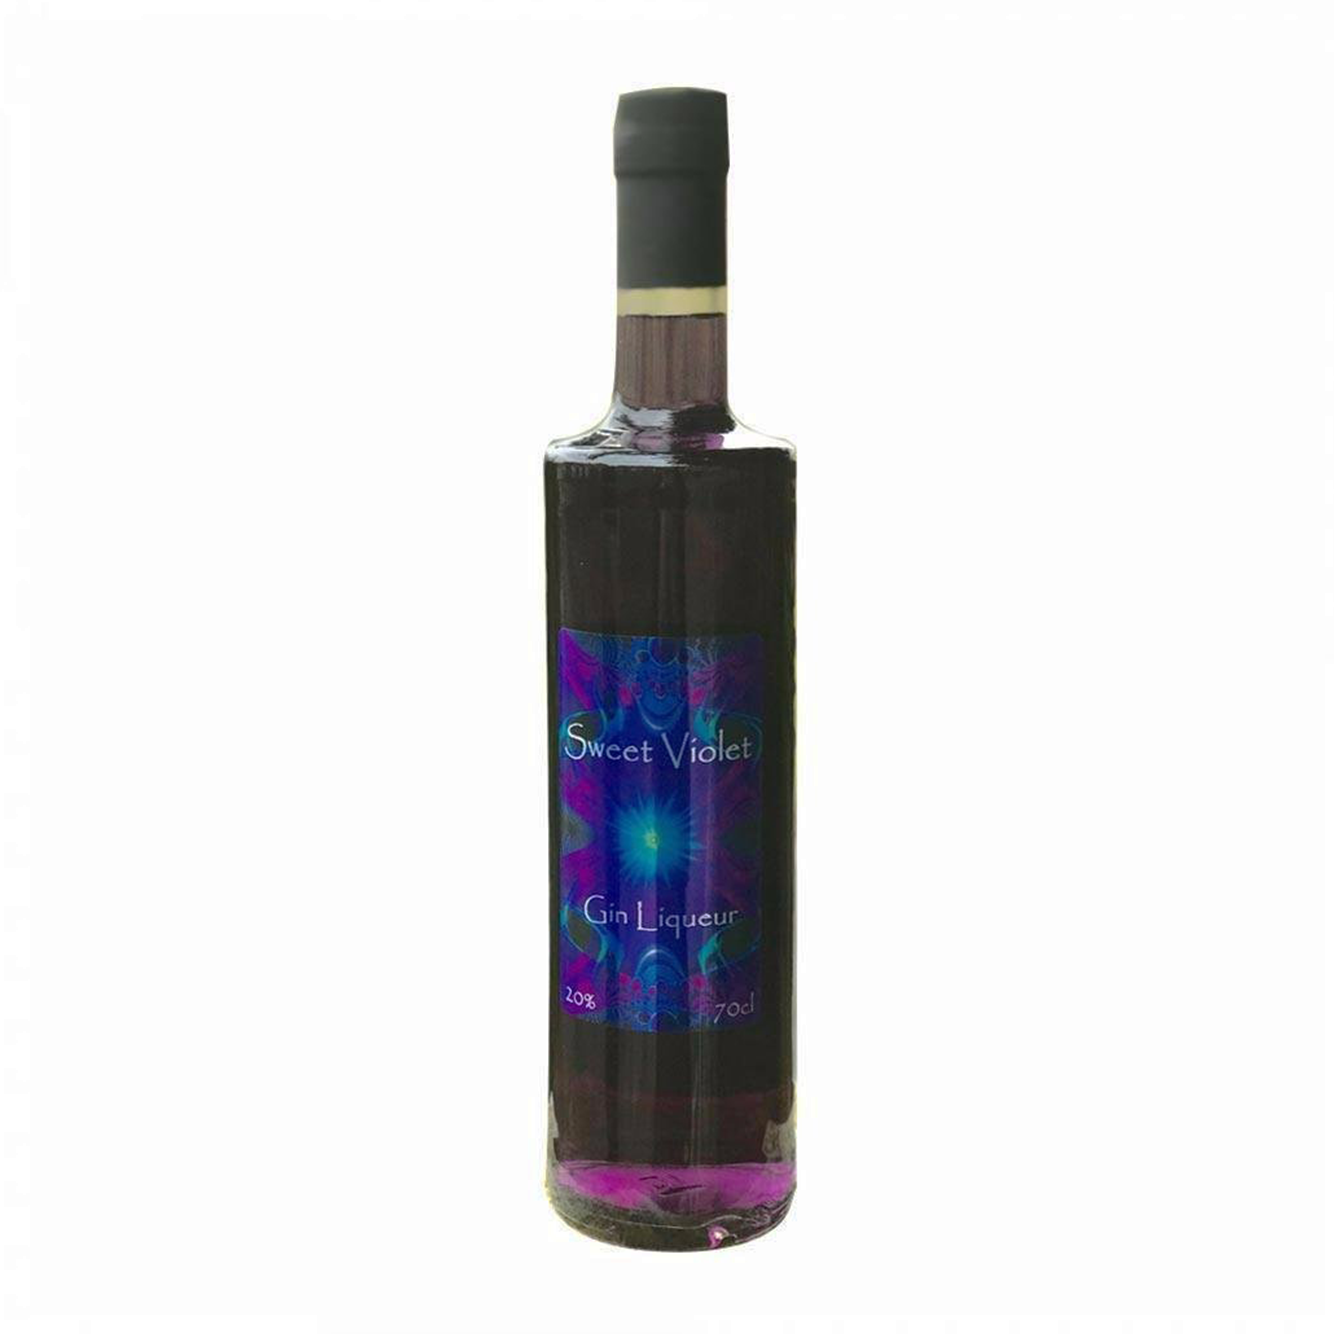 Raisthorpe Sweet Violet Gin Liqueur